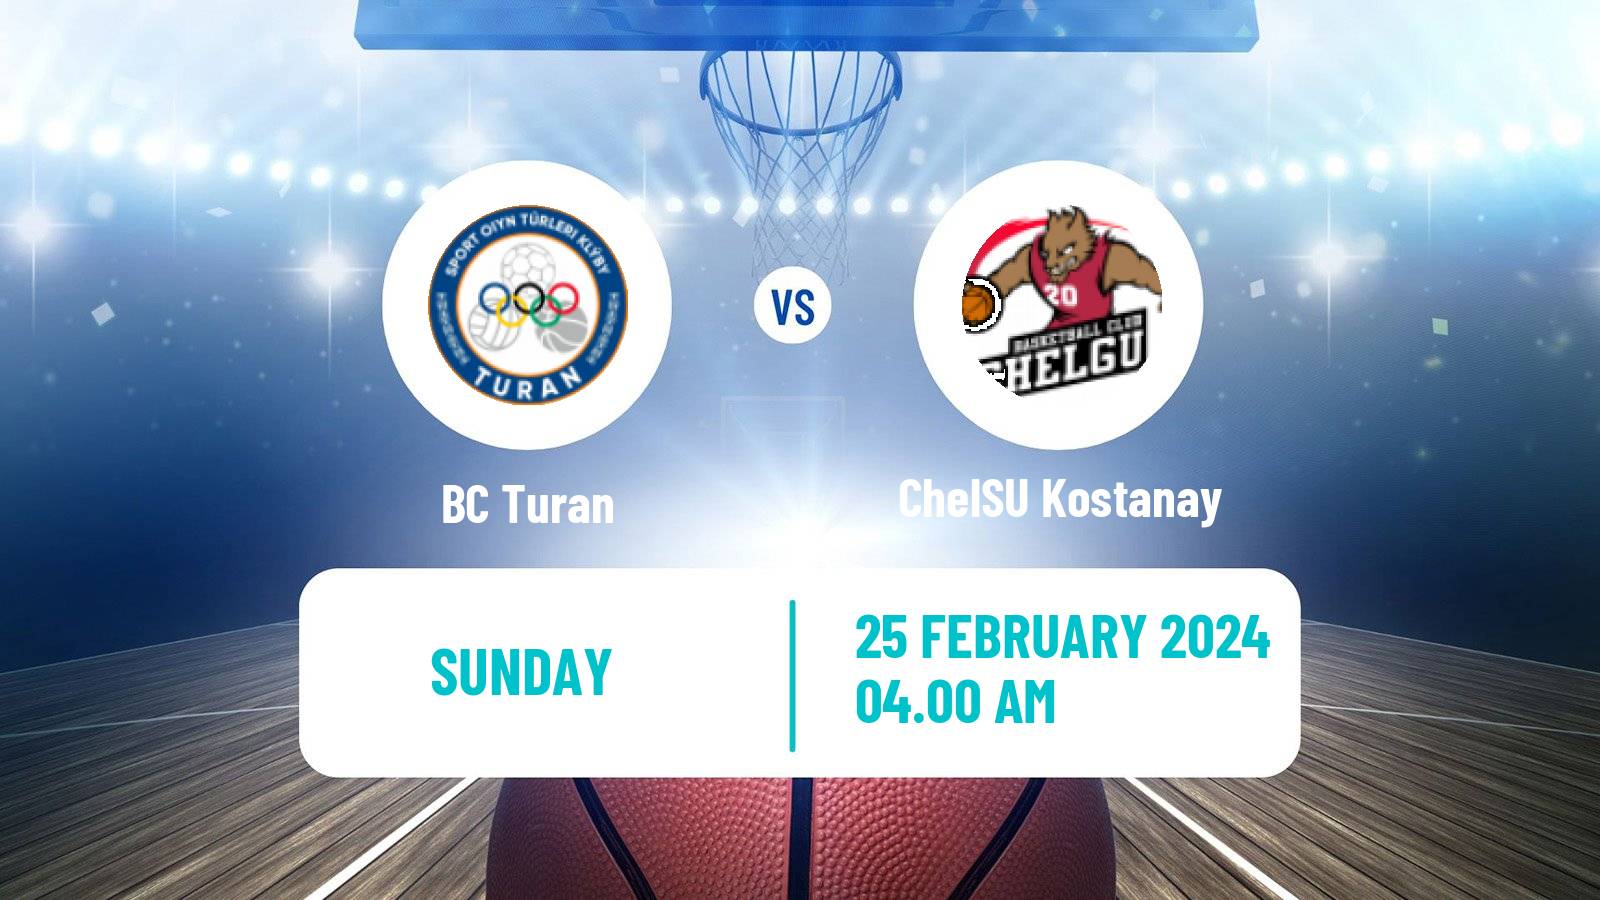 Basketball Kazakh Higher League Basketball Turan - ChelSU Kostanay